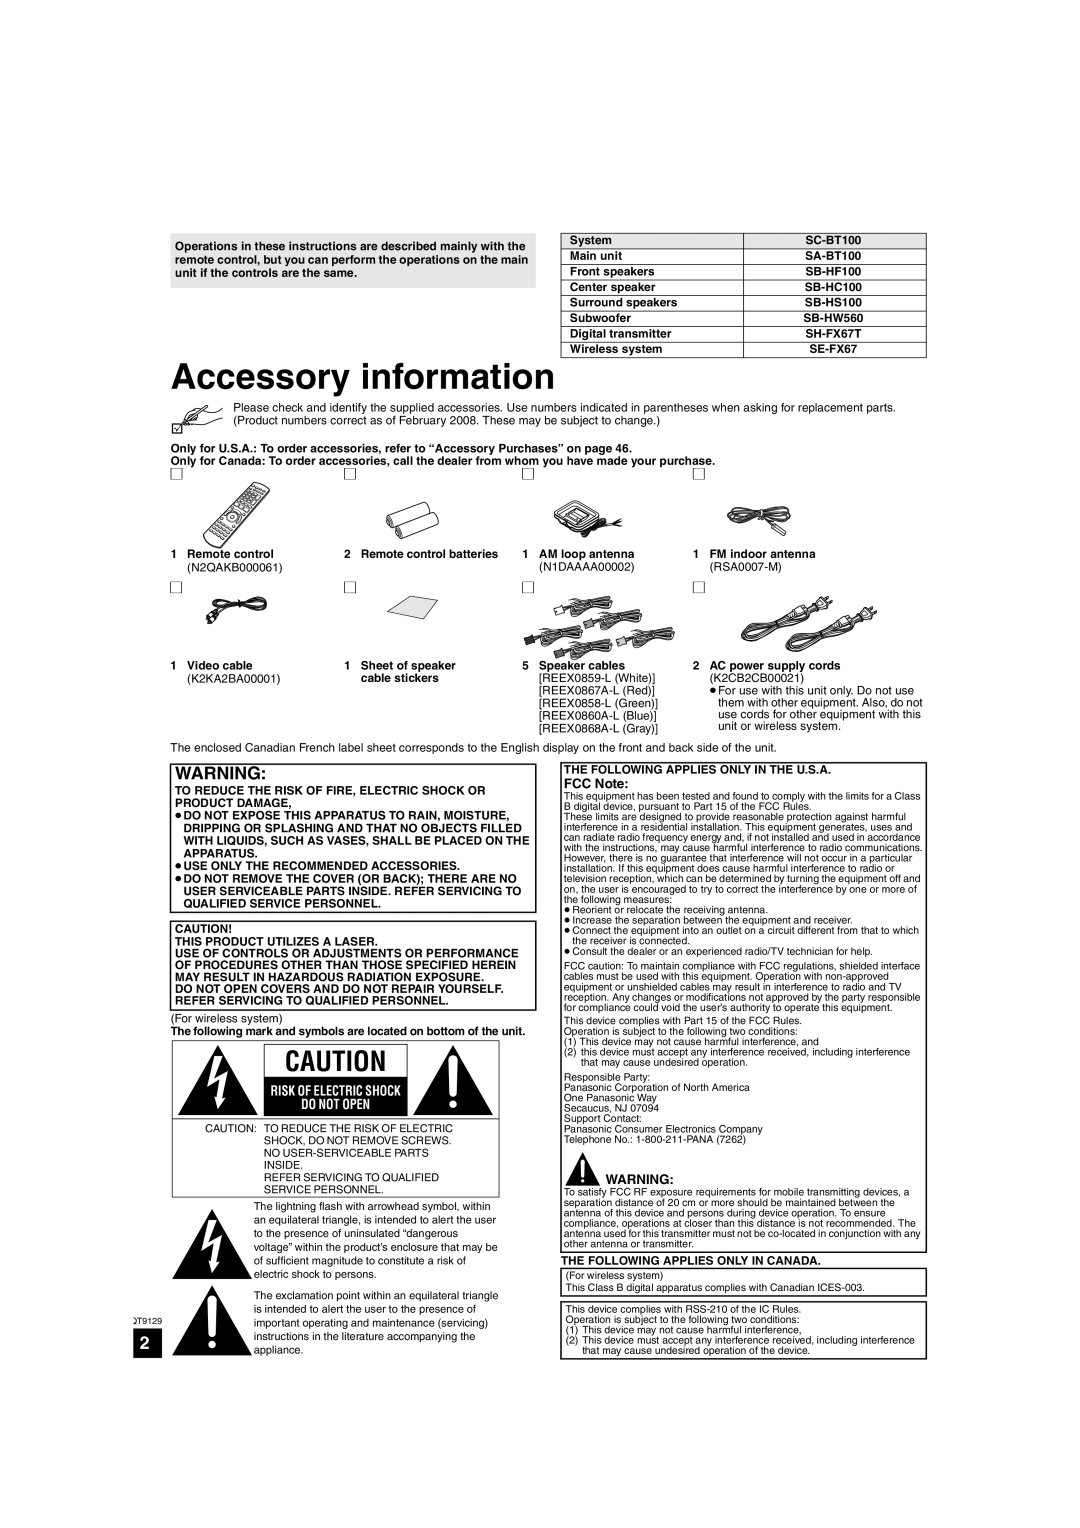 Panasonic SC-BT100 warranty Accessory information, Risk Of Electric Shock Do Not Open, FCC Note 